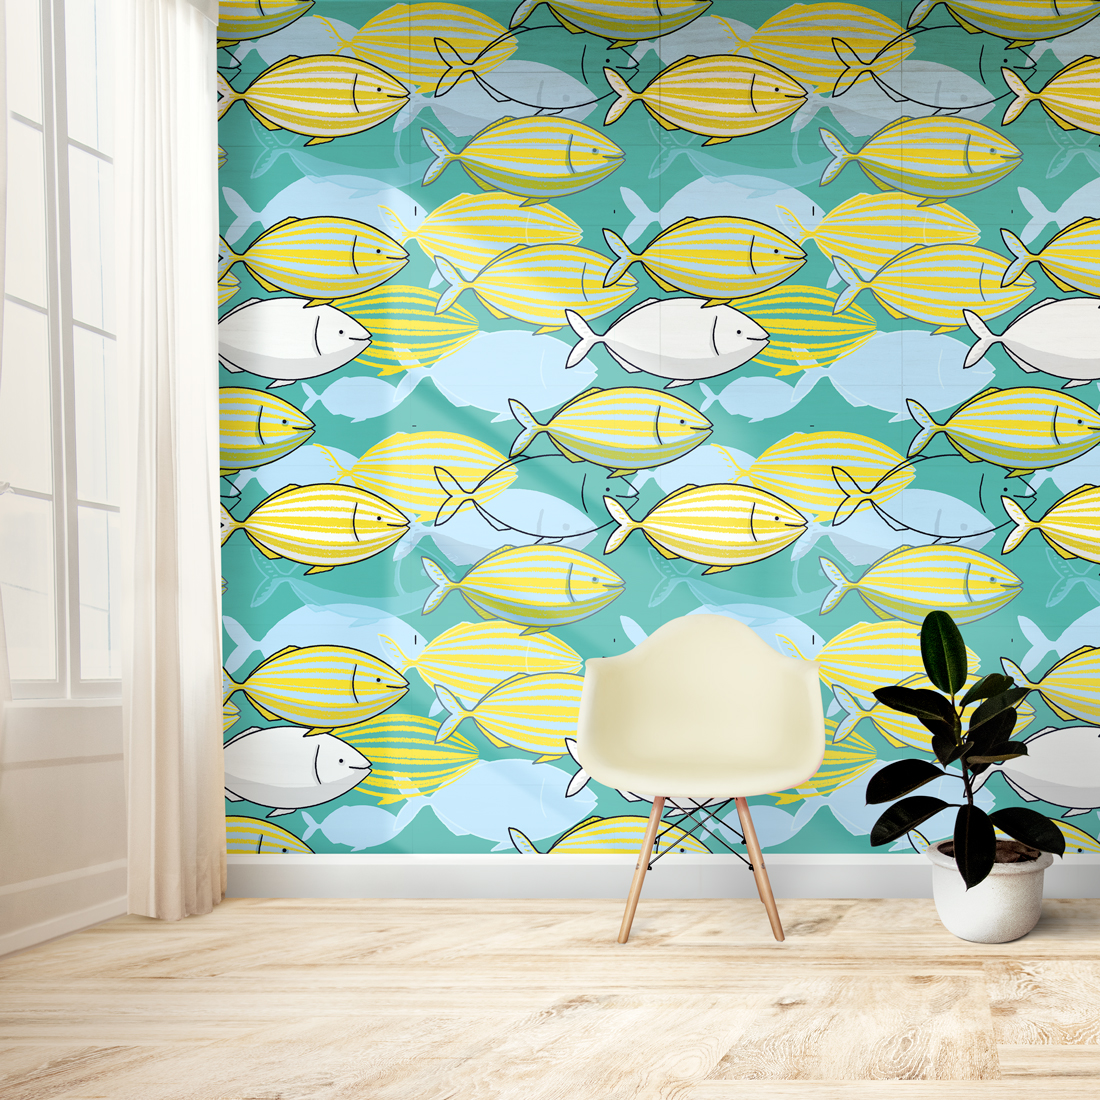 pr-apt-wallpaper-pesci-square